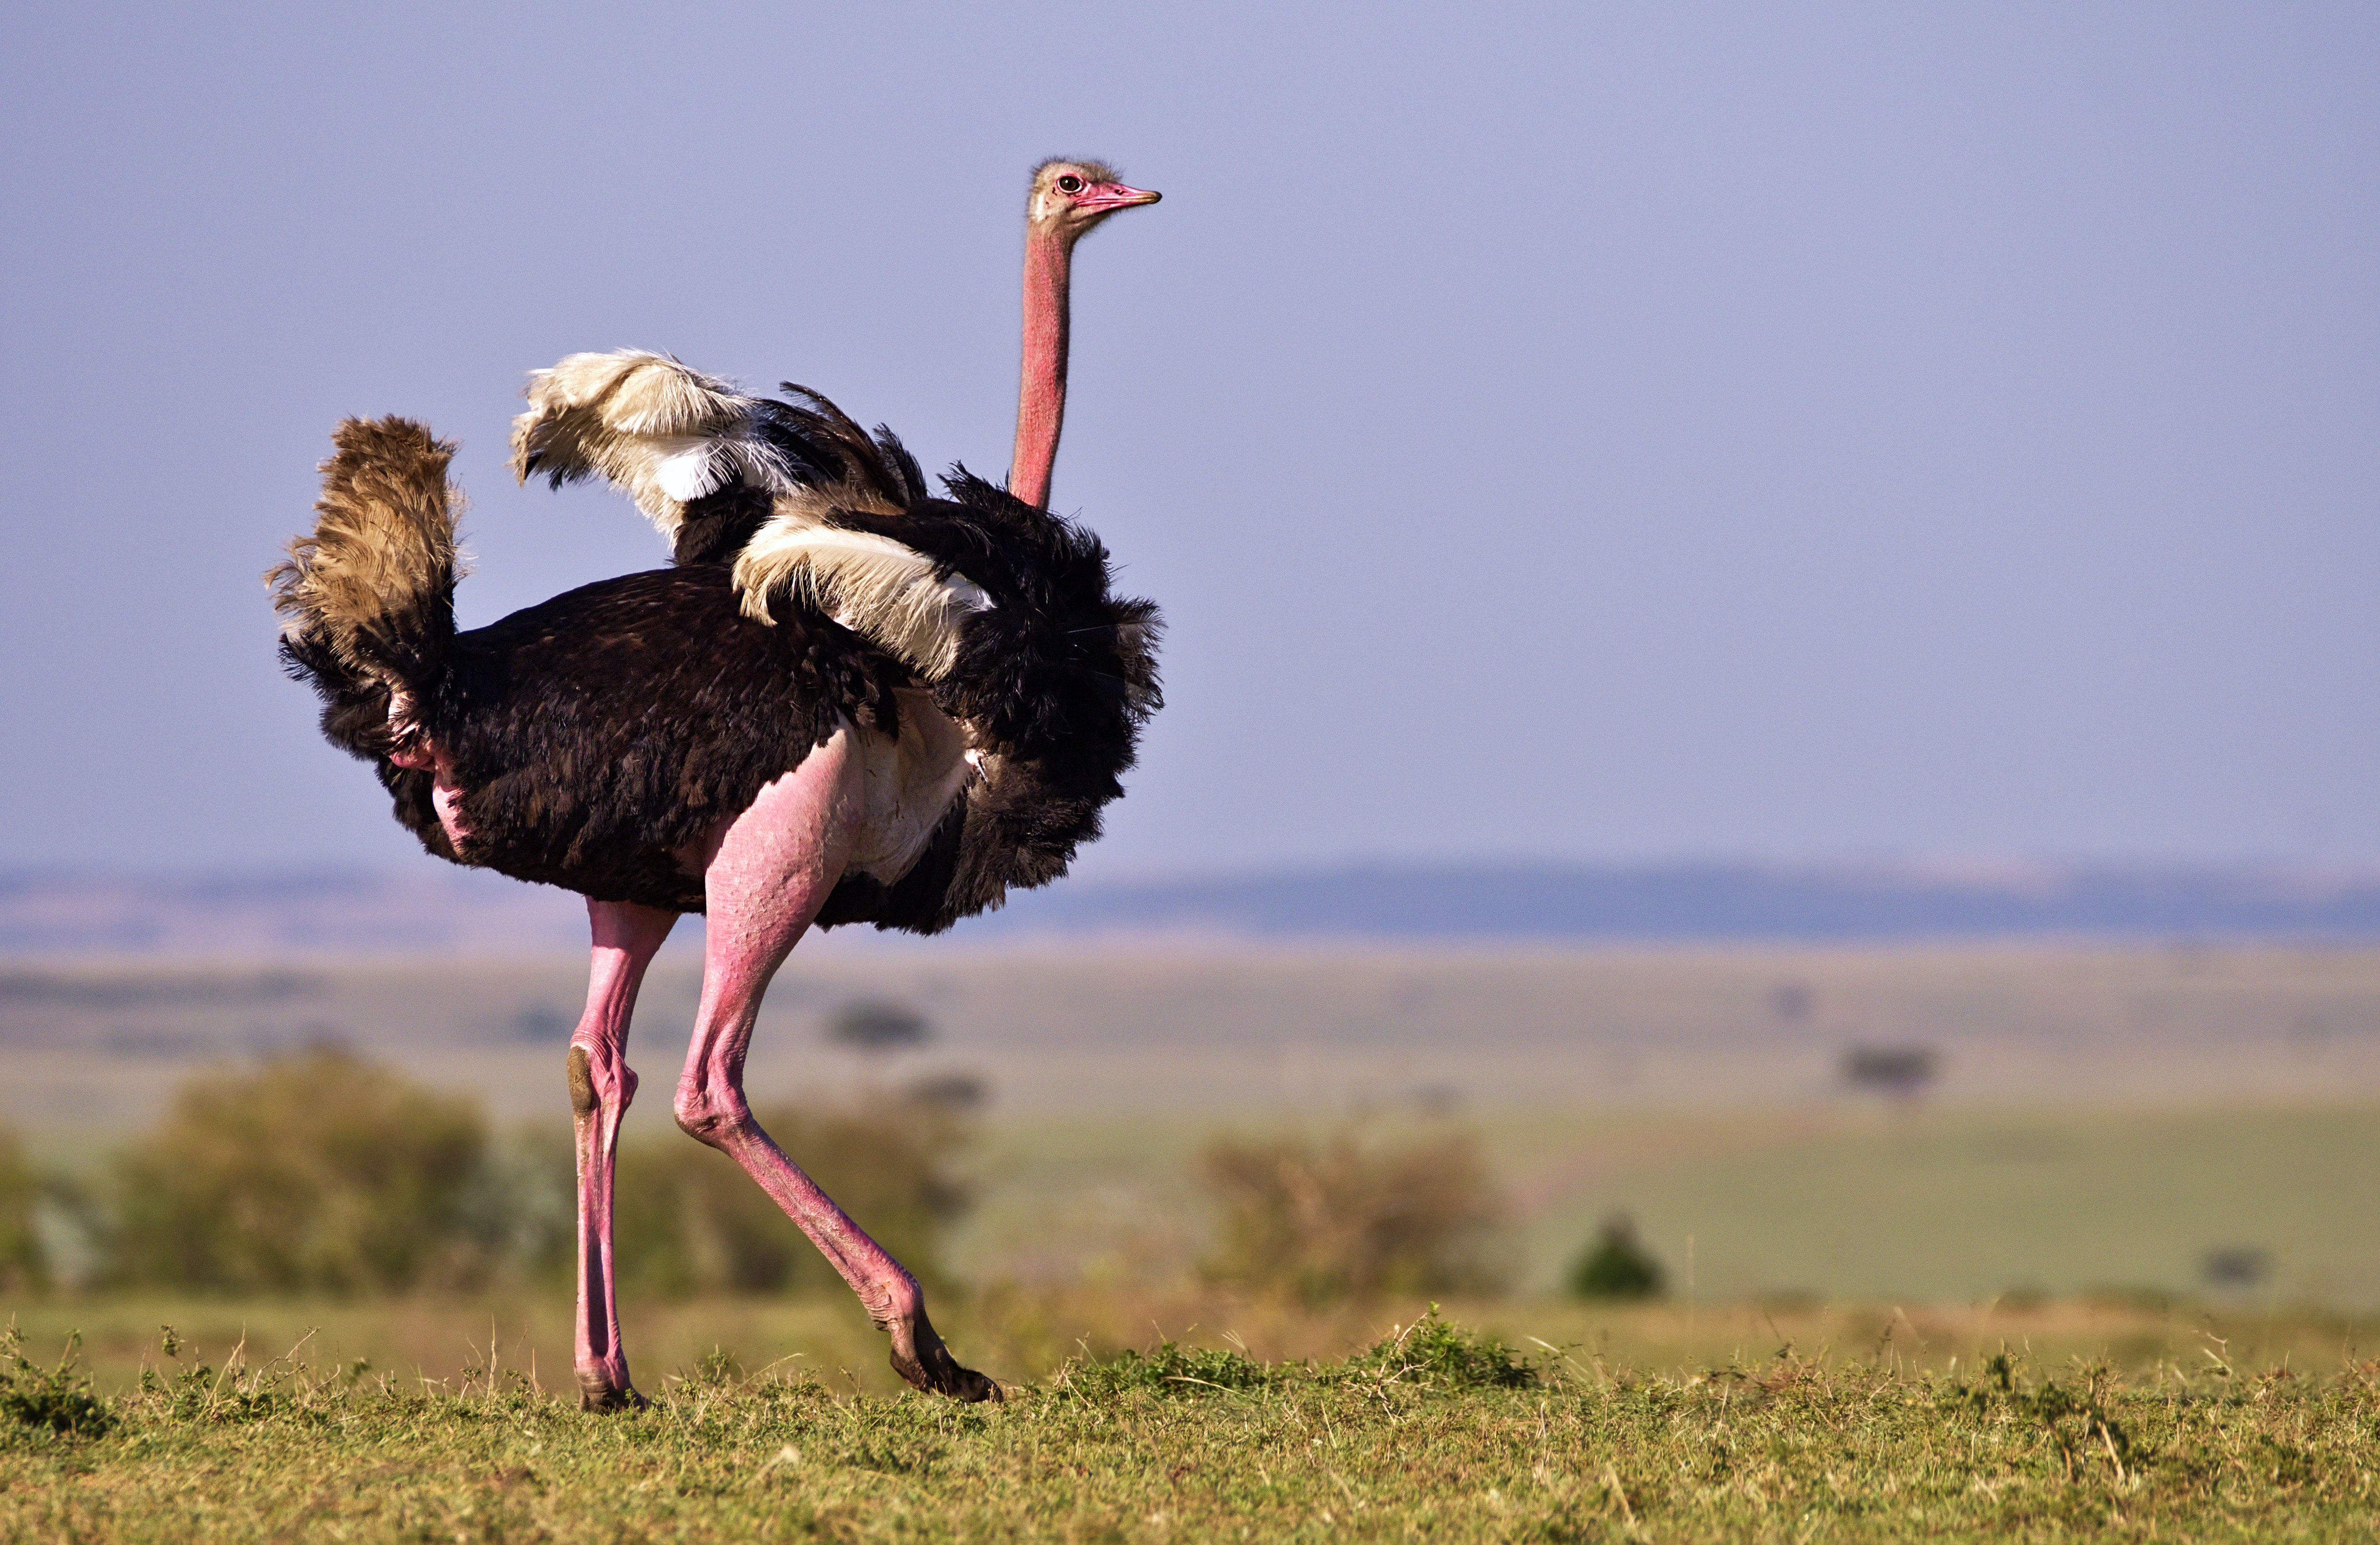 482019 descargar imagen animales, avestruz, ave, reserva nacional masai mara, aves: fondos de pantalla y protectores de pantalla gratis